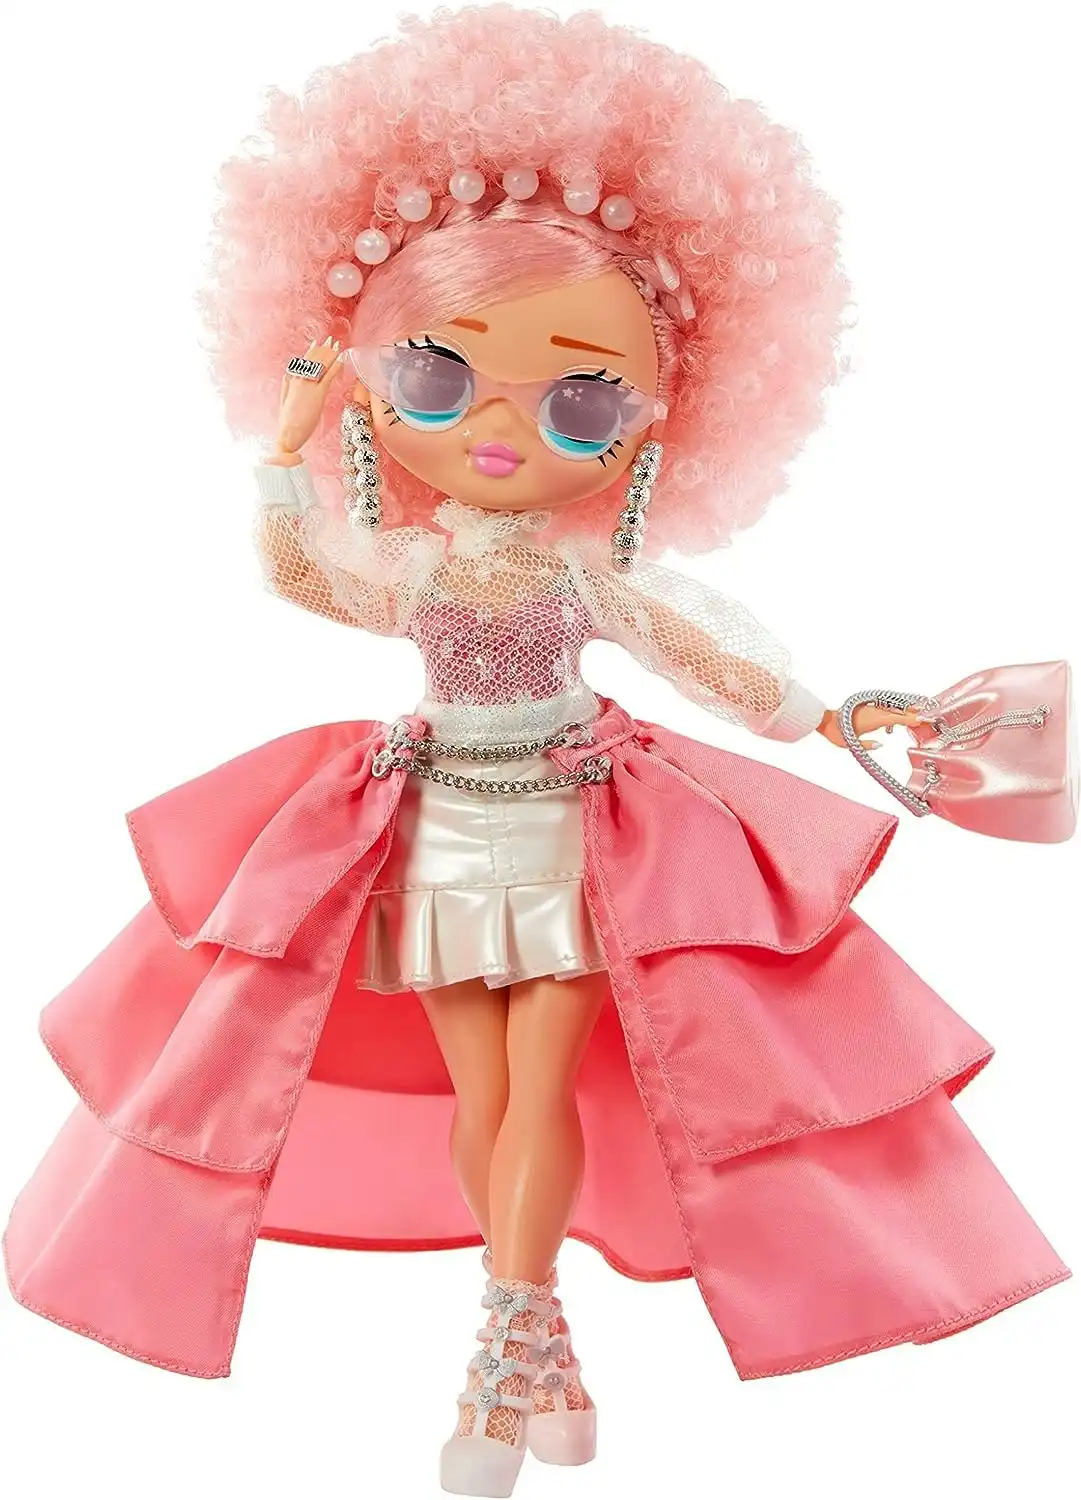 L.O.L. Surprise! OMG Present Surprise Series 2 Fashion Doll Miss Celebrate